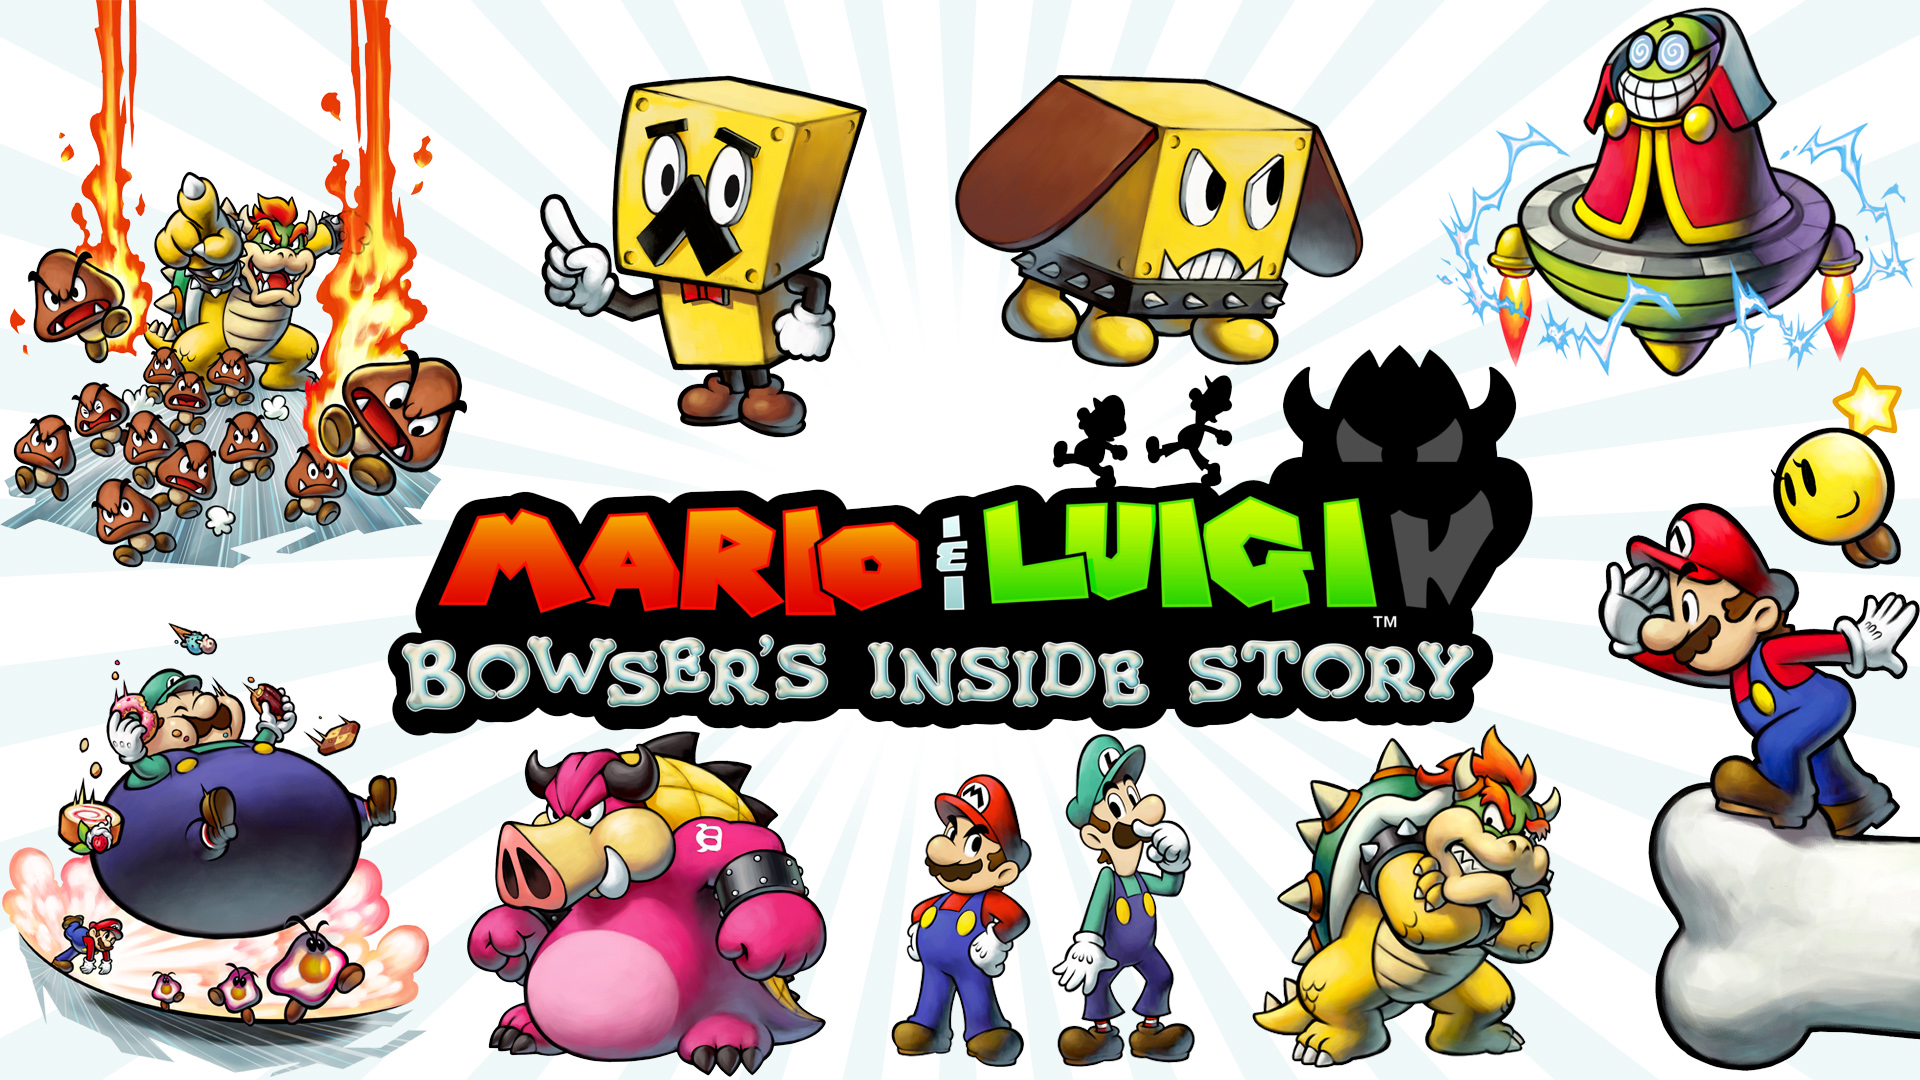 Mario luigi bowser. Луиджи и Боузер. Марио и Луиджи Боузер инсайд стори. Марио Bowser inside story. Марио и Луиджи и Боузер.